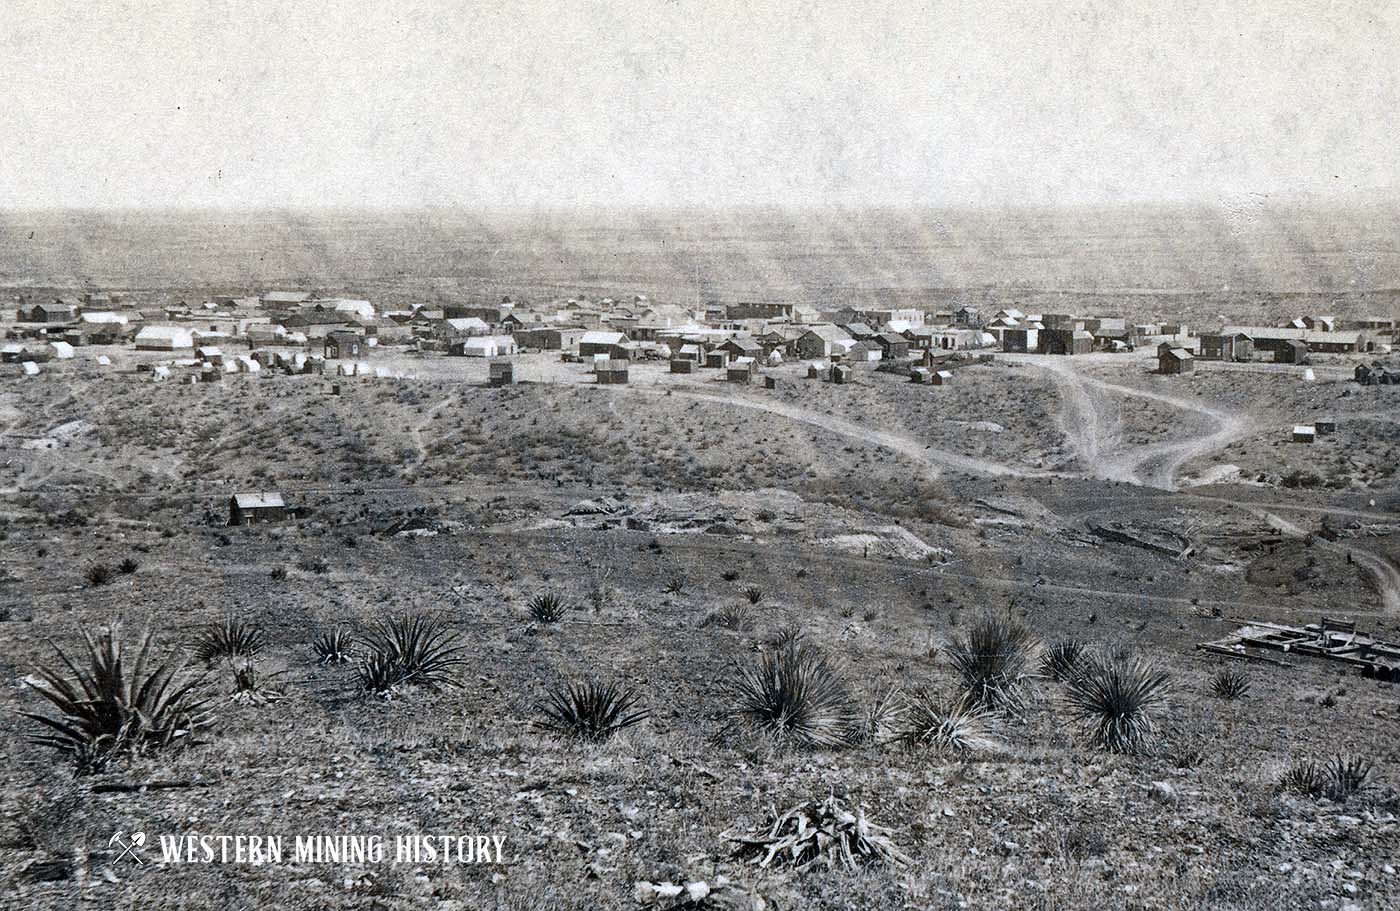 View of Tombstone, Arizona ca. 1880